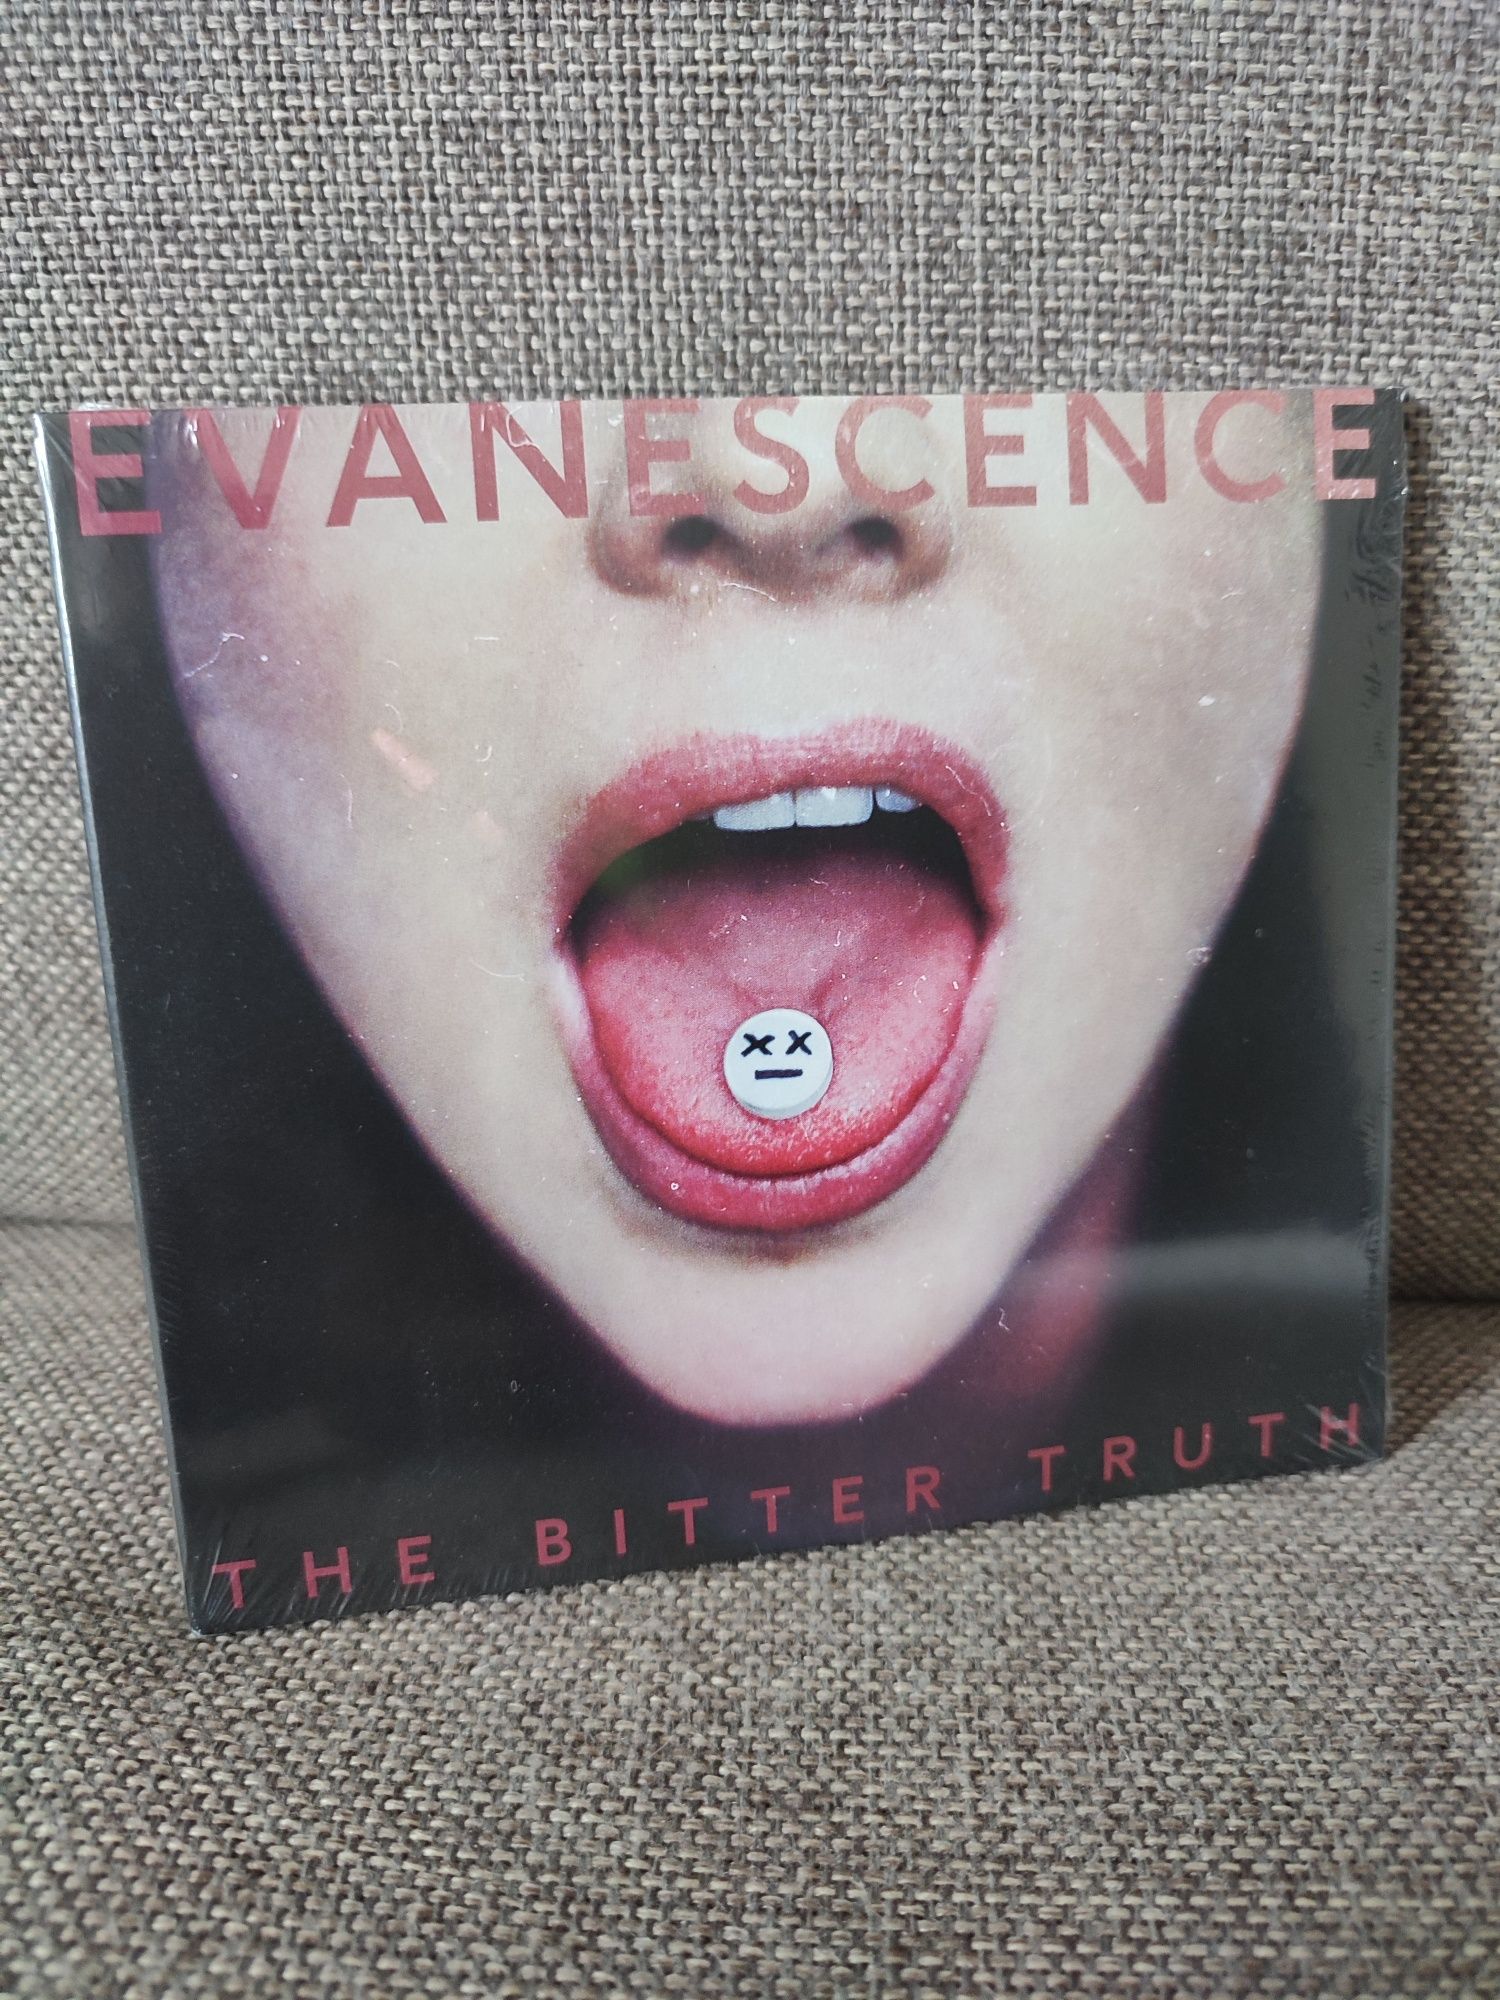 Evanescence the bitter truth płyta CD nowa okazja na prezent